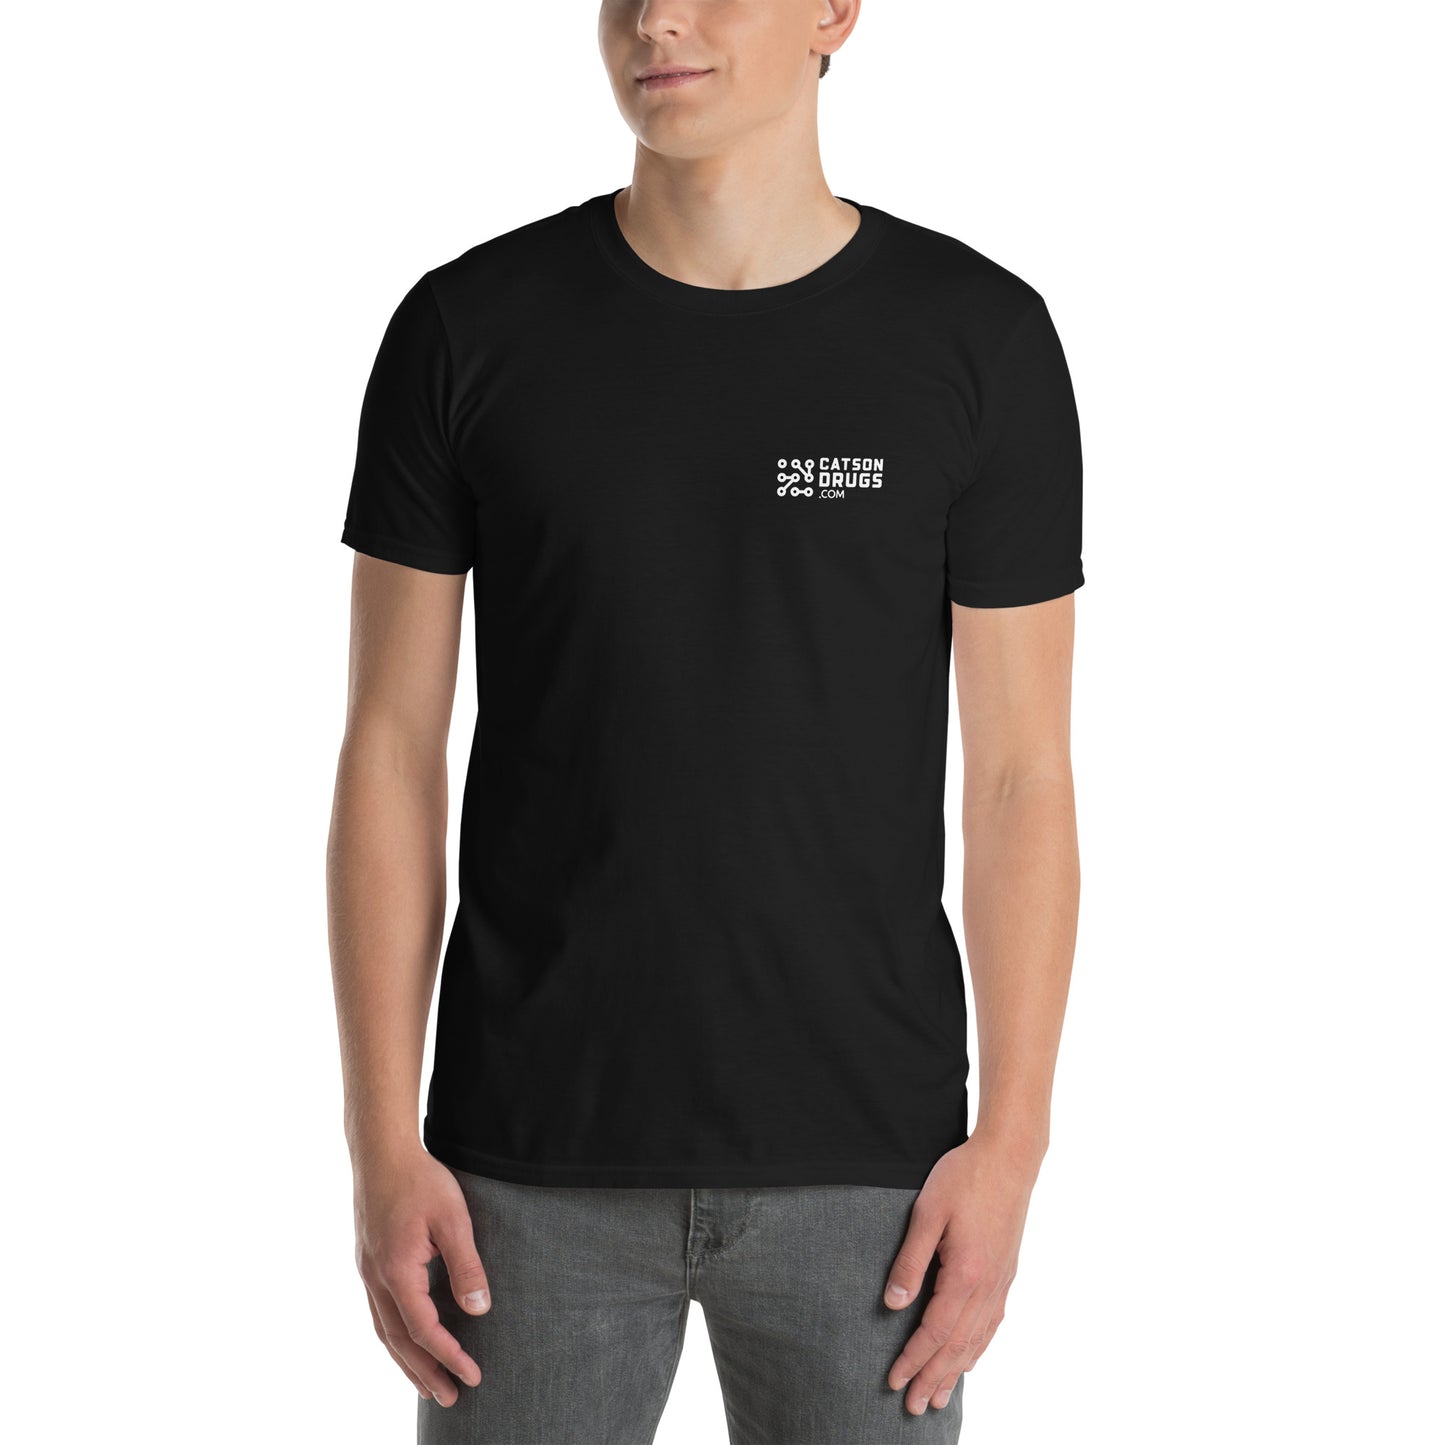 Follow Me - Camiseta unisex